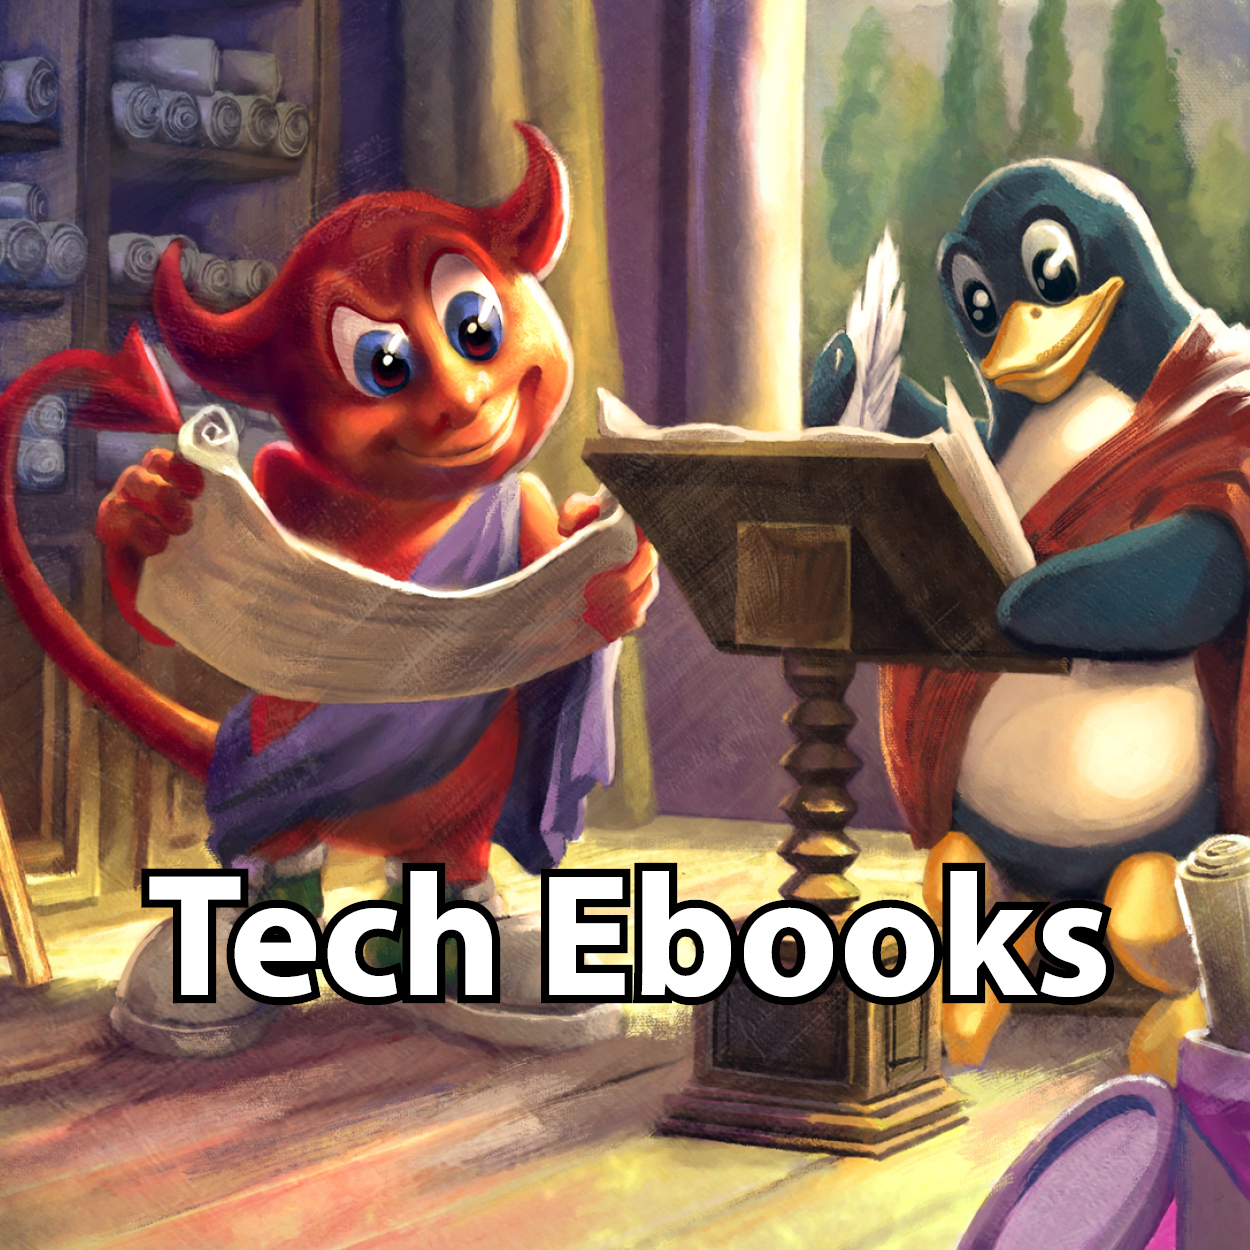 Tech Ebooks